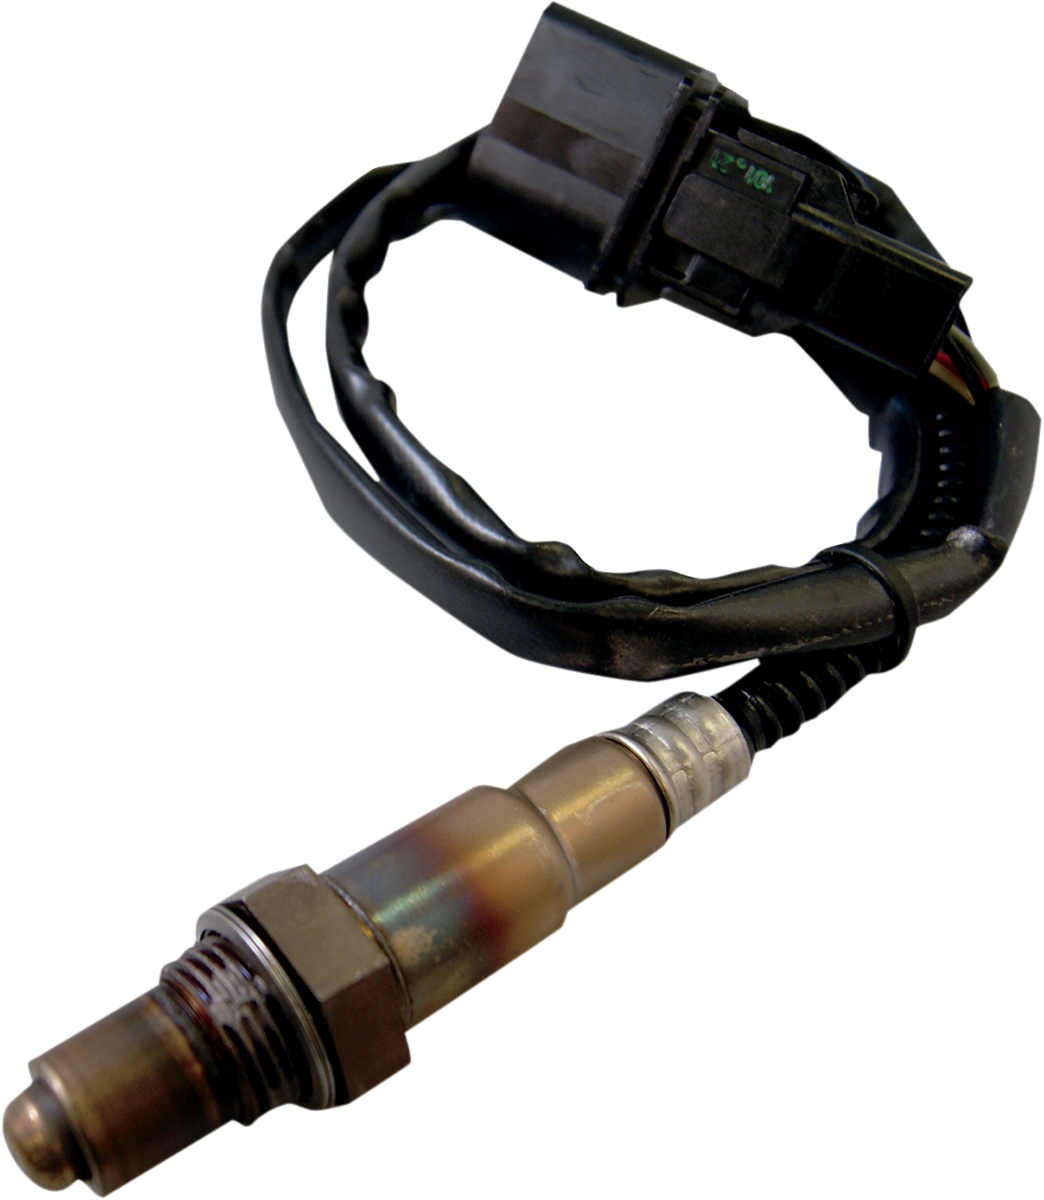 Thundermax ECM Replacement 18mm Oxygen Sensor for Harley Davidson Motorcycle